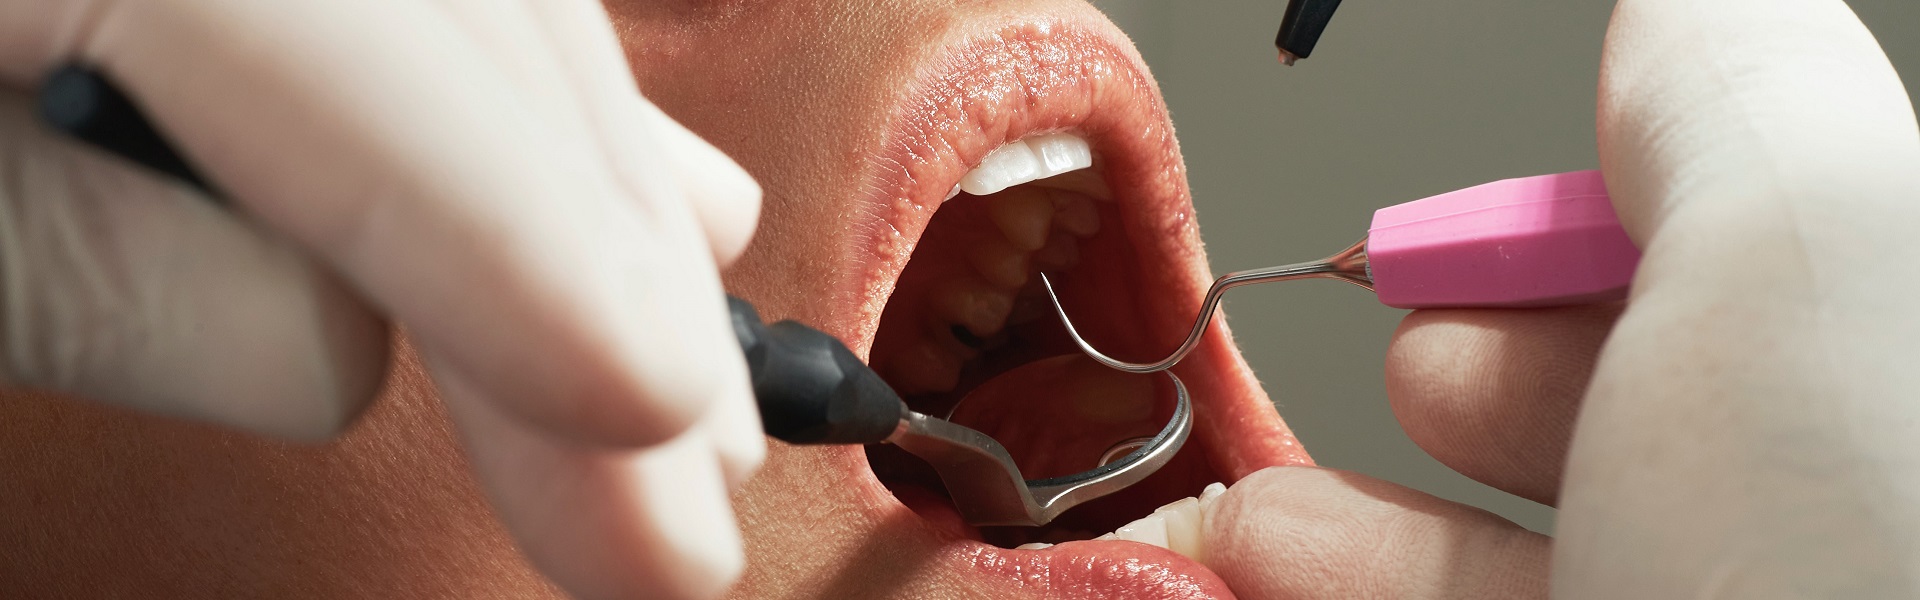 Physical therapy |  Dental practice Kragujevac